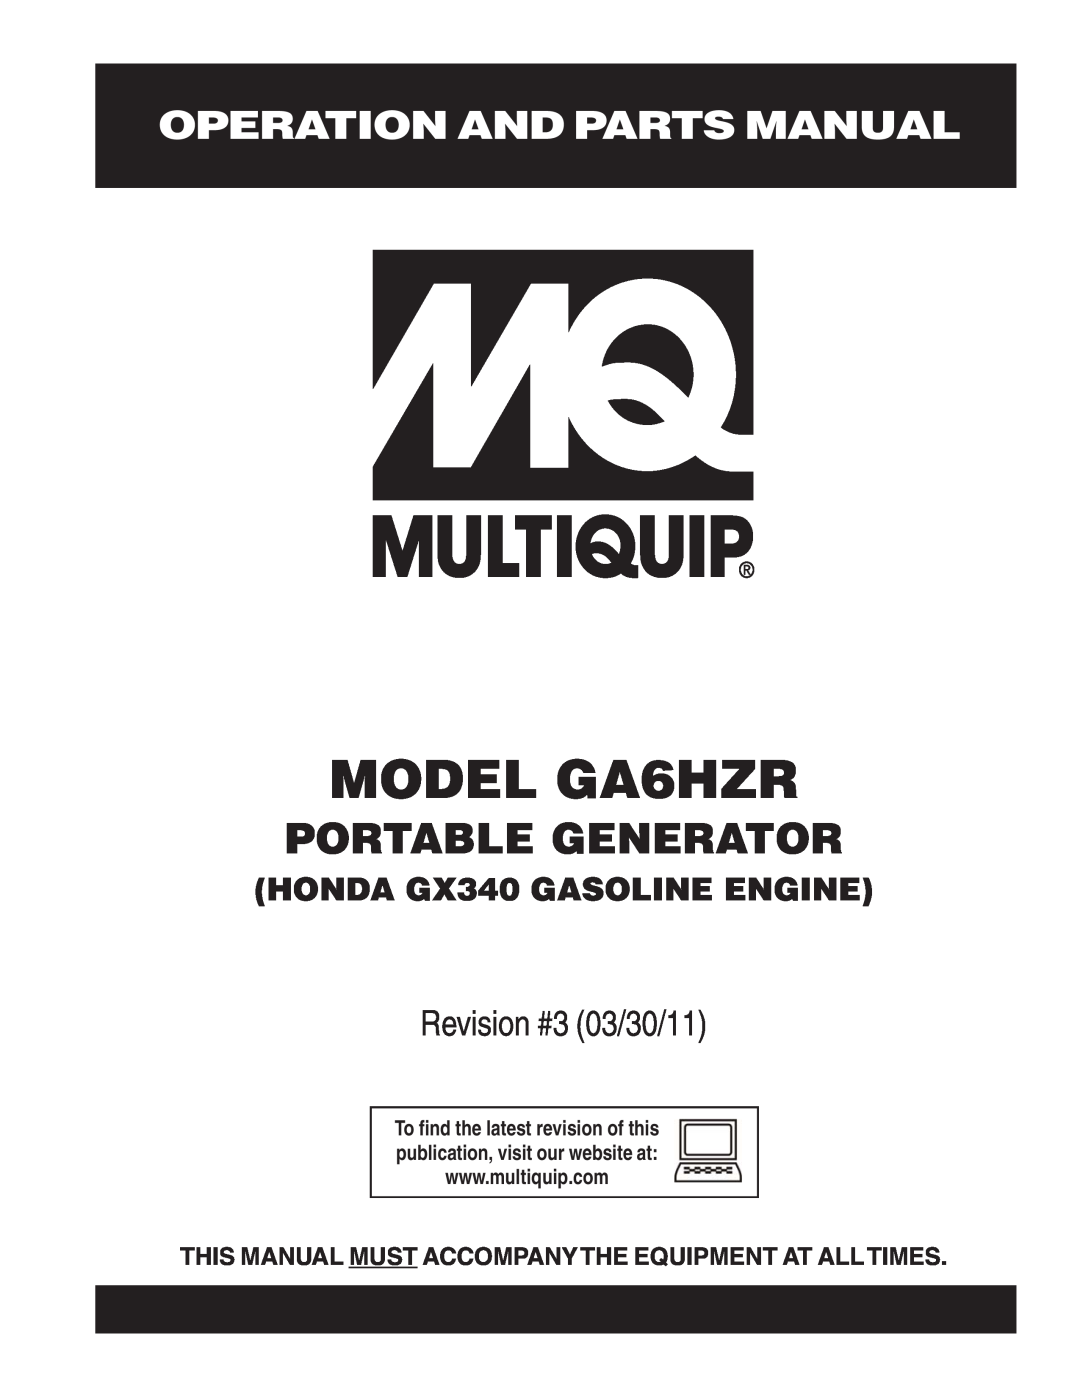 Multiquip manual Operation And Parts Manual, HONDA GX340 GASOLINE ENGINE, MODEL GA6HZR, Portable Generator 